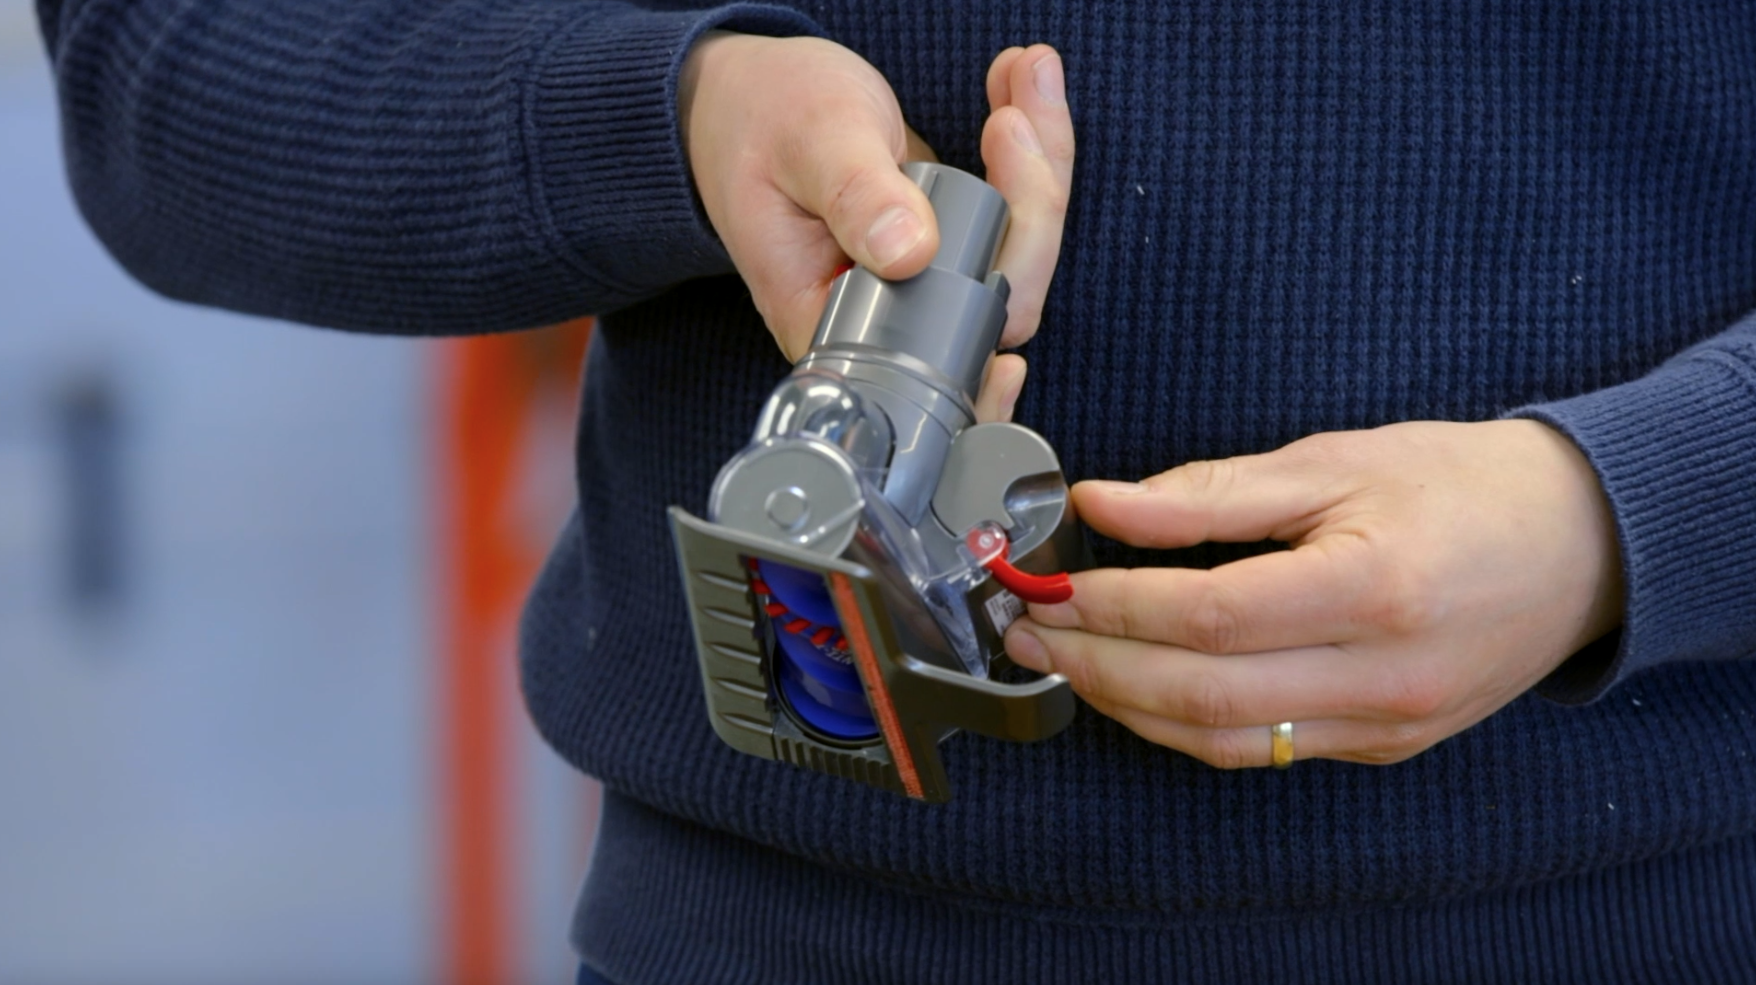 Dyson engineer Matt reassembling a Dyson DC39 vacuum cleaner